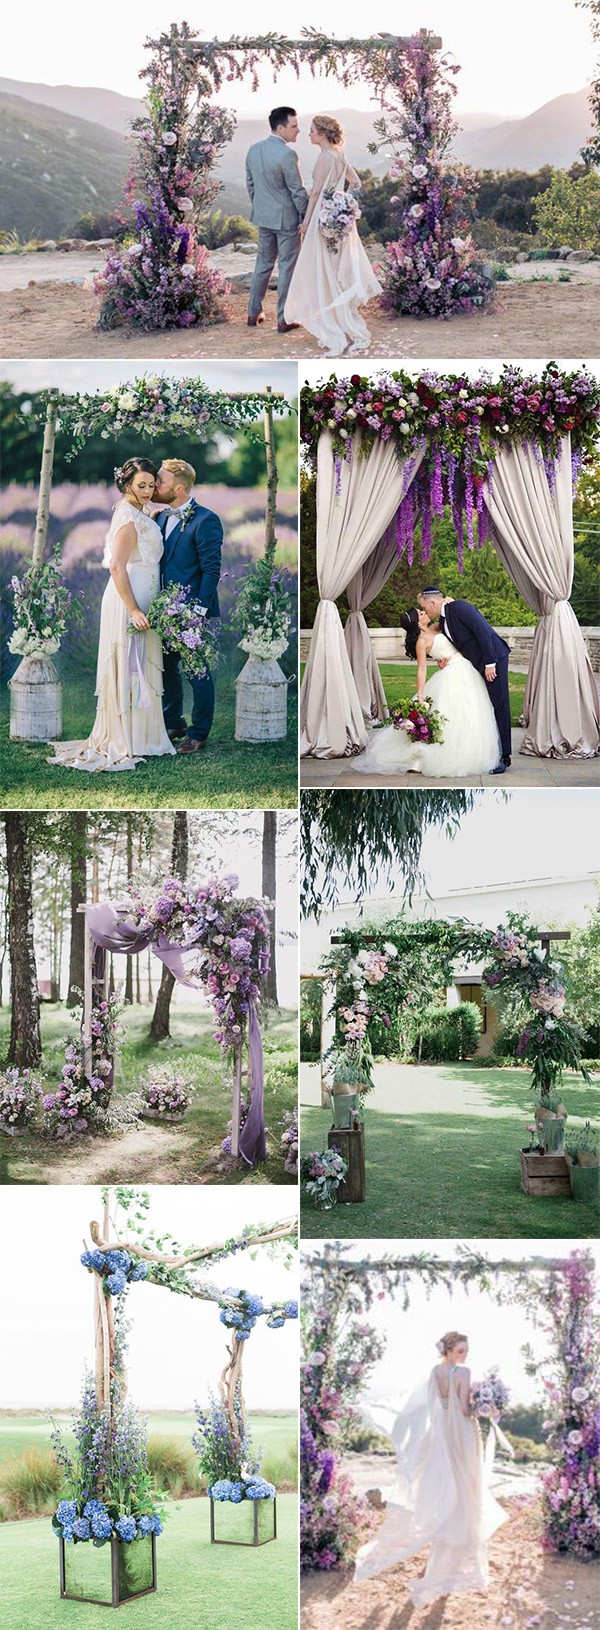 lavender wedding arch decoration ideas